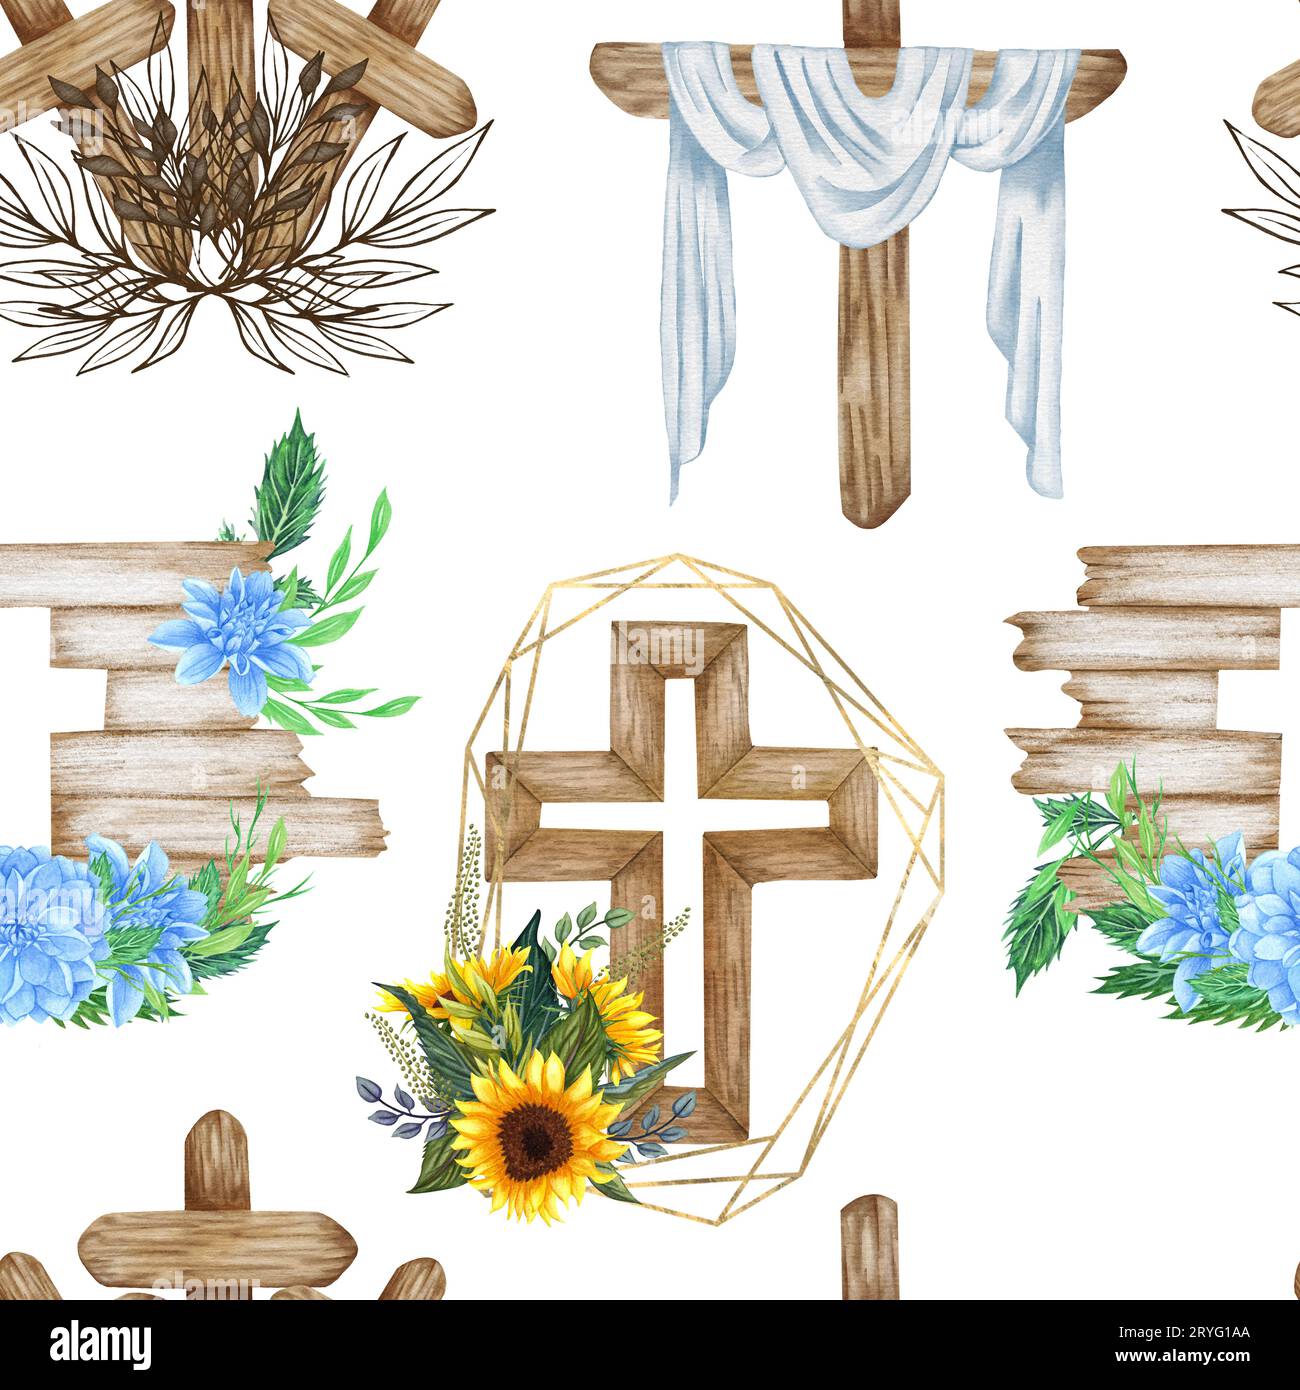 Rustic Wood Cross clipart, Watercolor Floral Crosses clipart